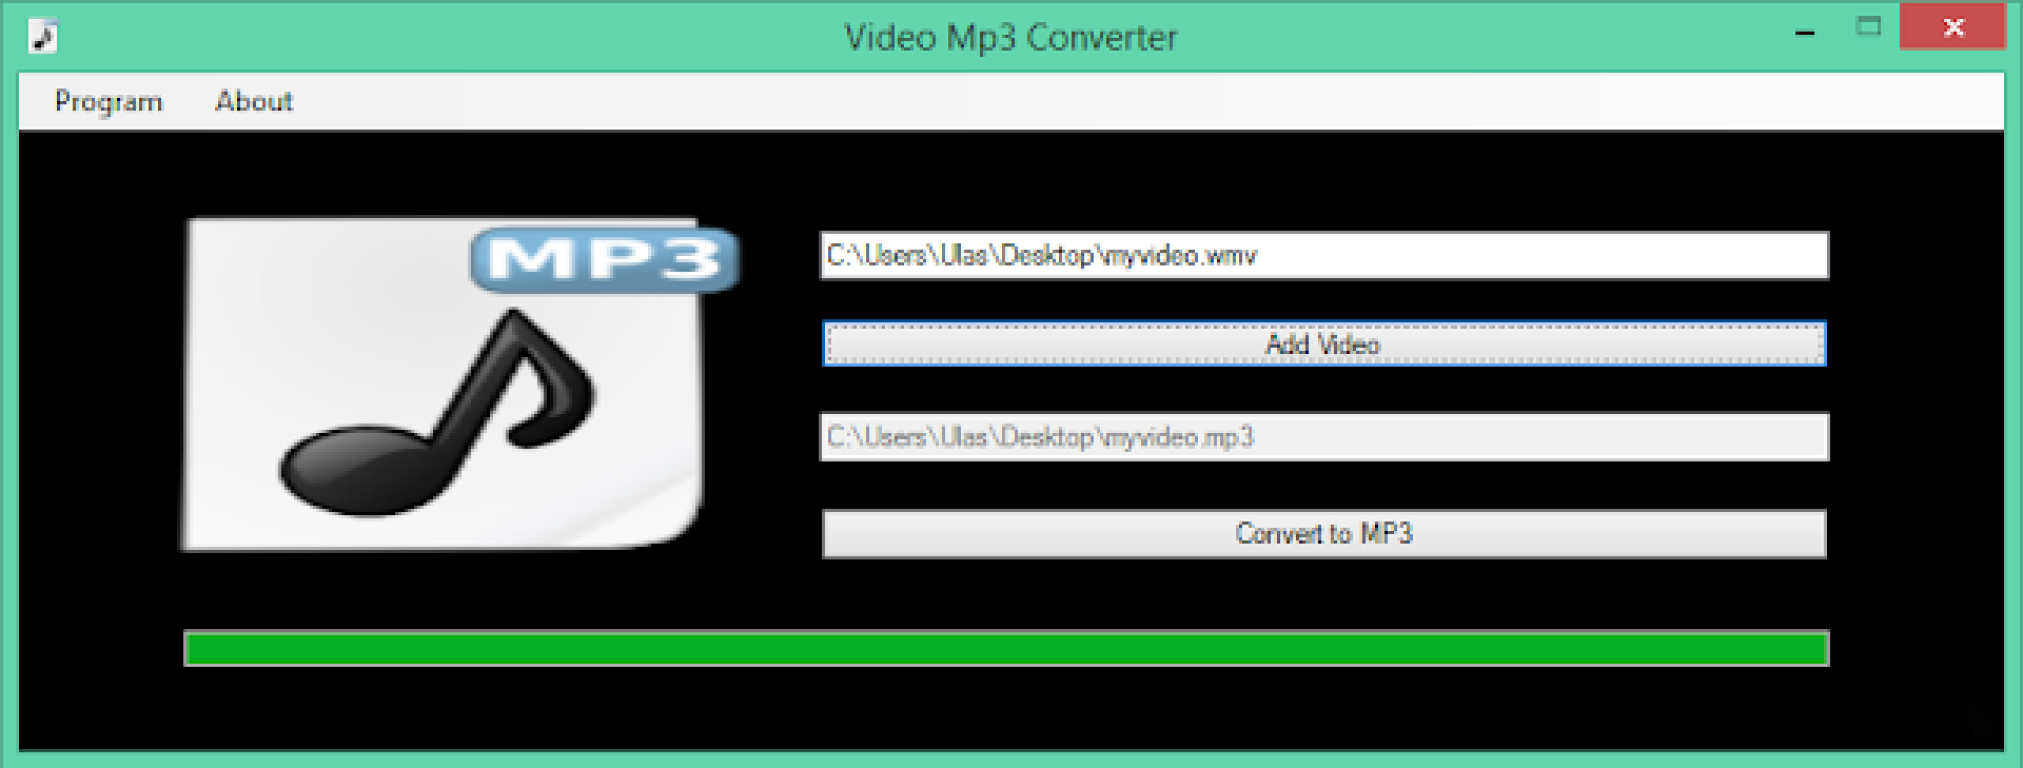 Download Video Mp3 Converter for Windows 11, 10, 7, 8/8.1 (64 bit/32 bit)